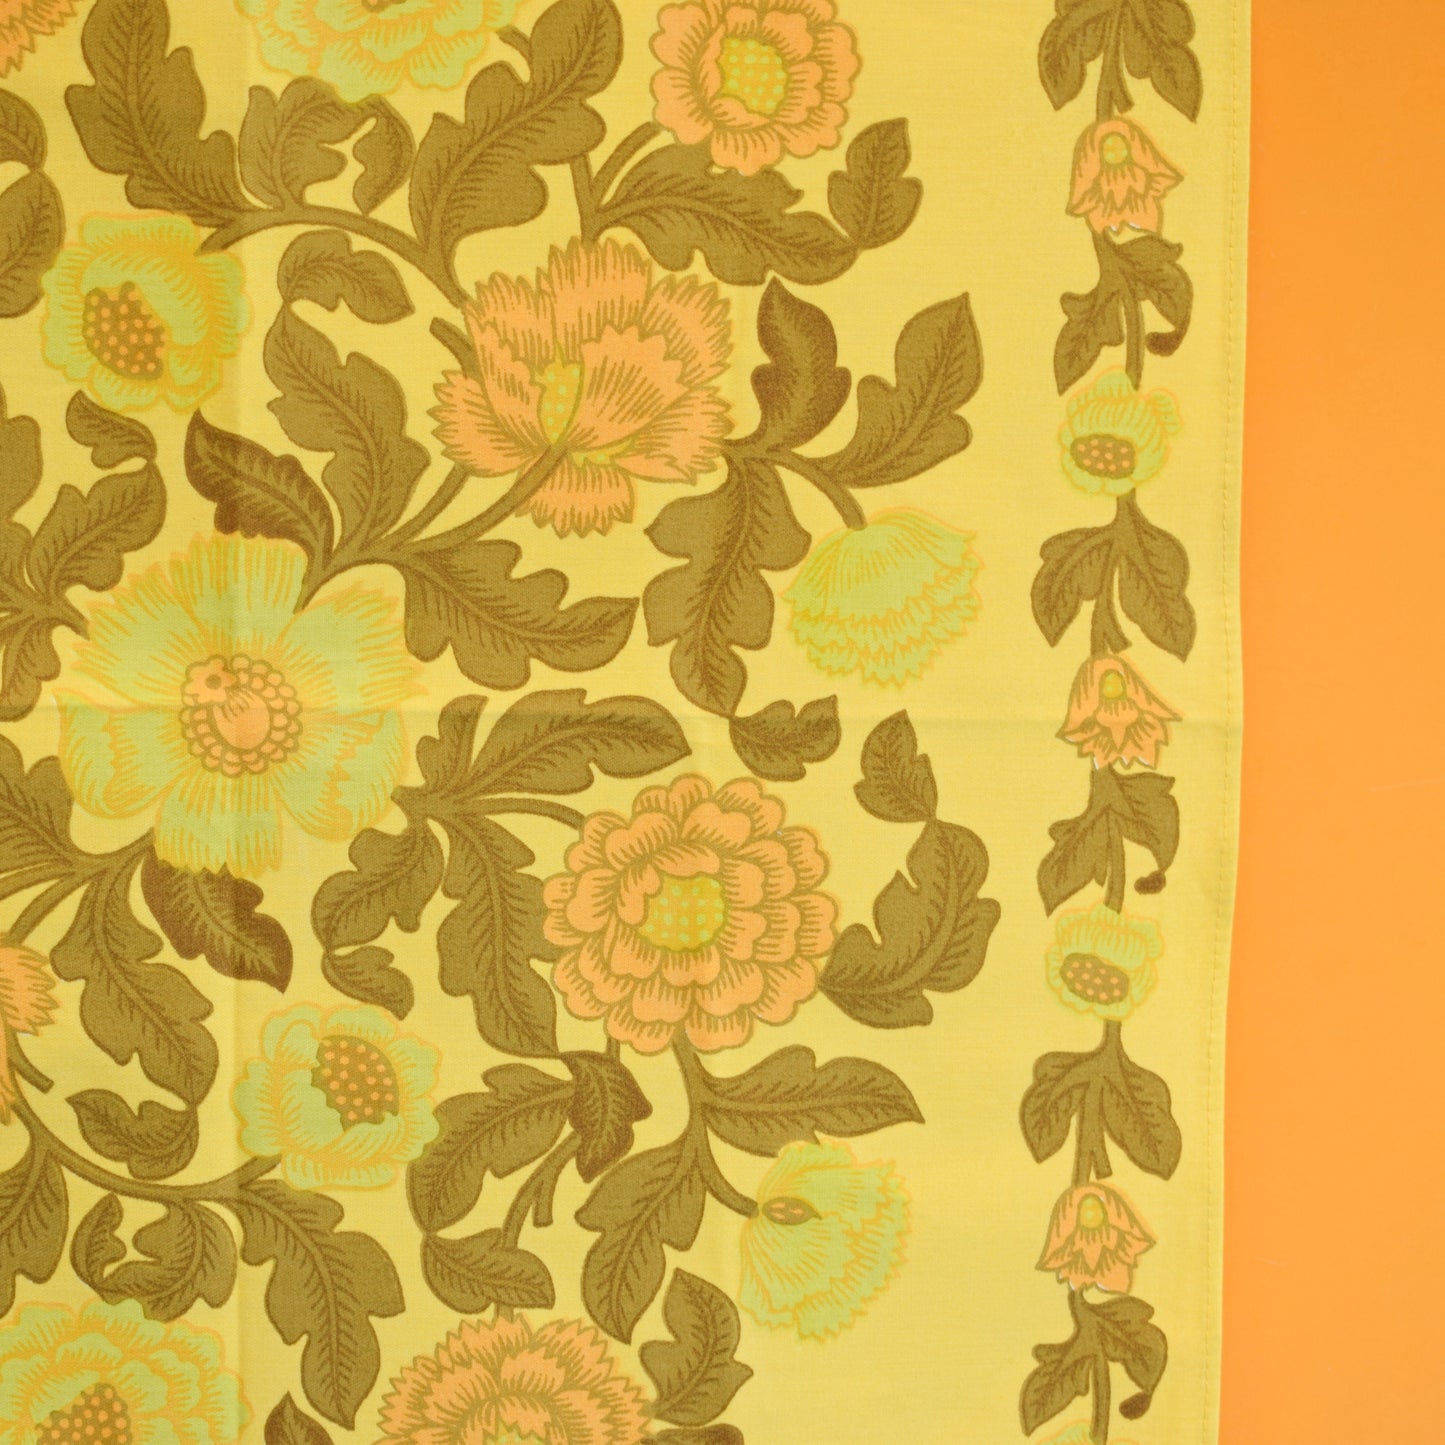 Vintage 1960s Cotton Tea Towel - Flower Power - Yellow